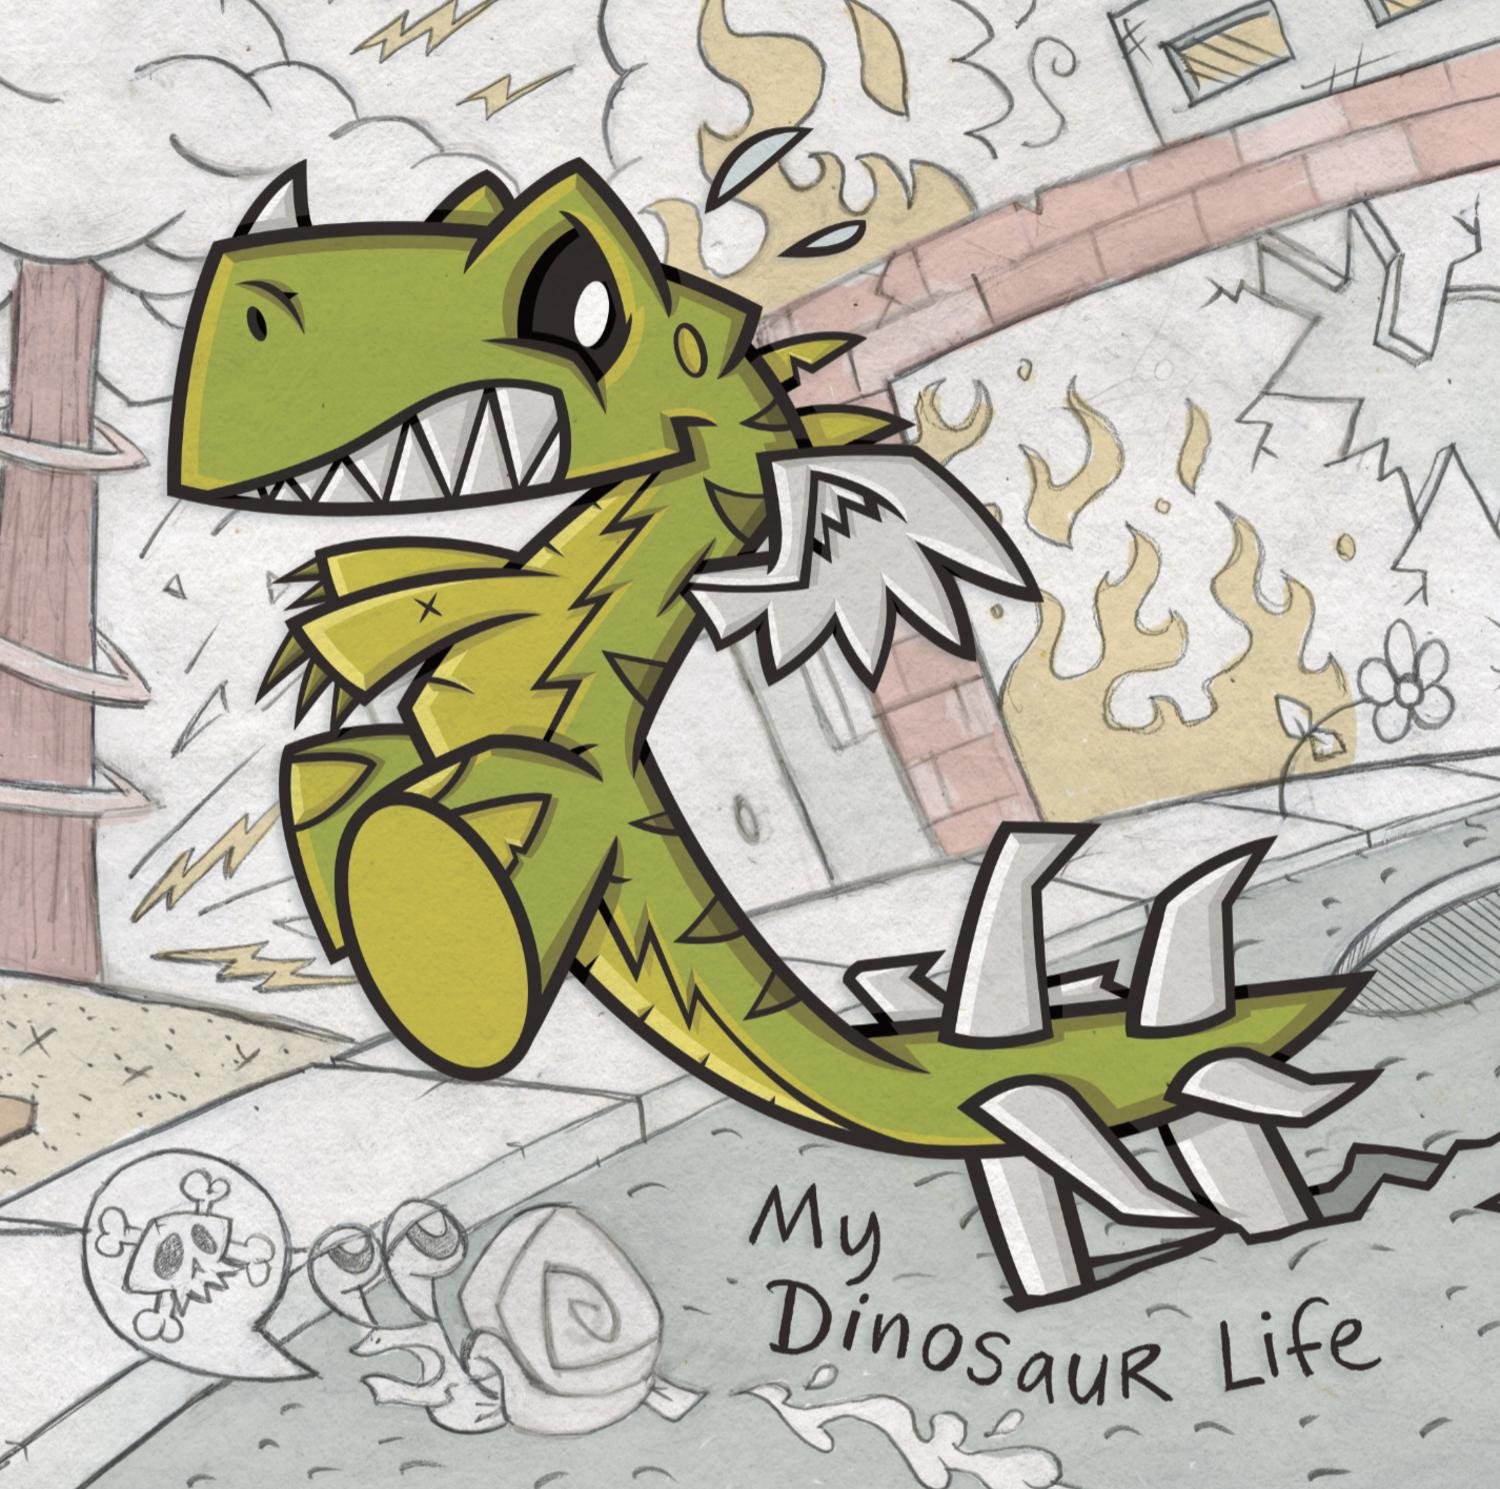 Motion City Soundtrack - My Dinosaur Life album cover